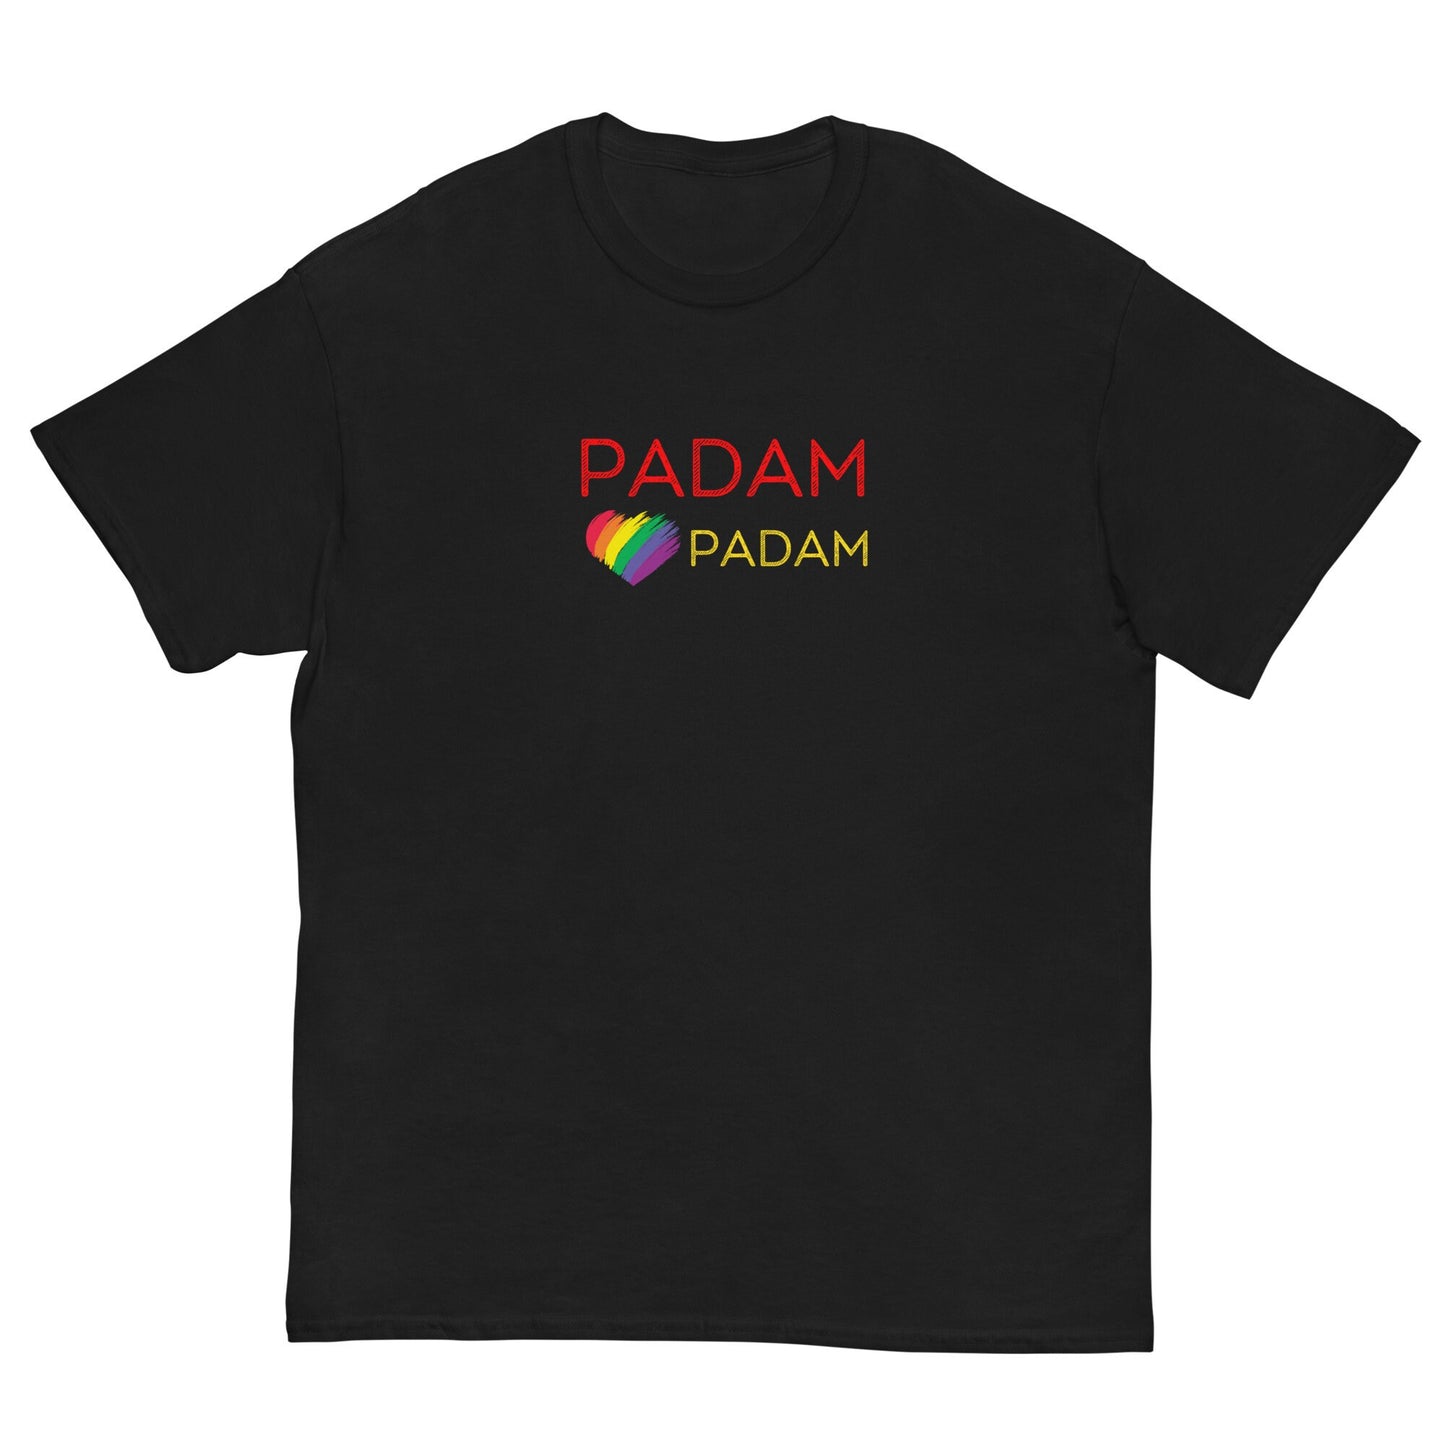 Padam Padam T-shirt with Rainbow Heart - Pride LGBT Fashion, Gay Icon shirt, Kylie Minogue, aromantic gay pride, asexual, gender fluid tee